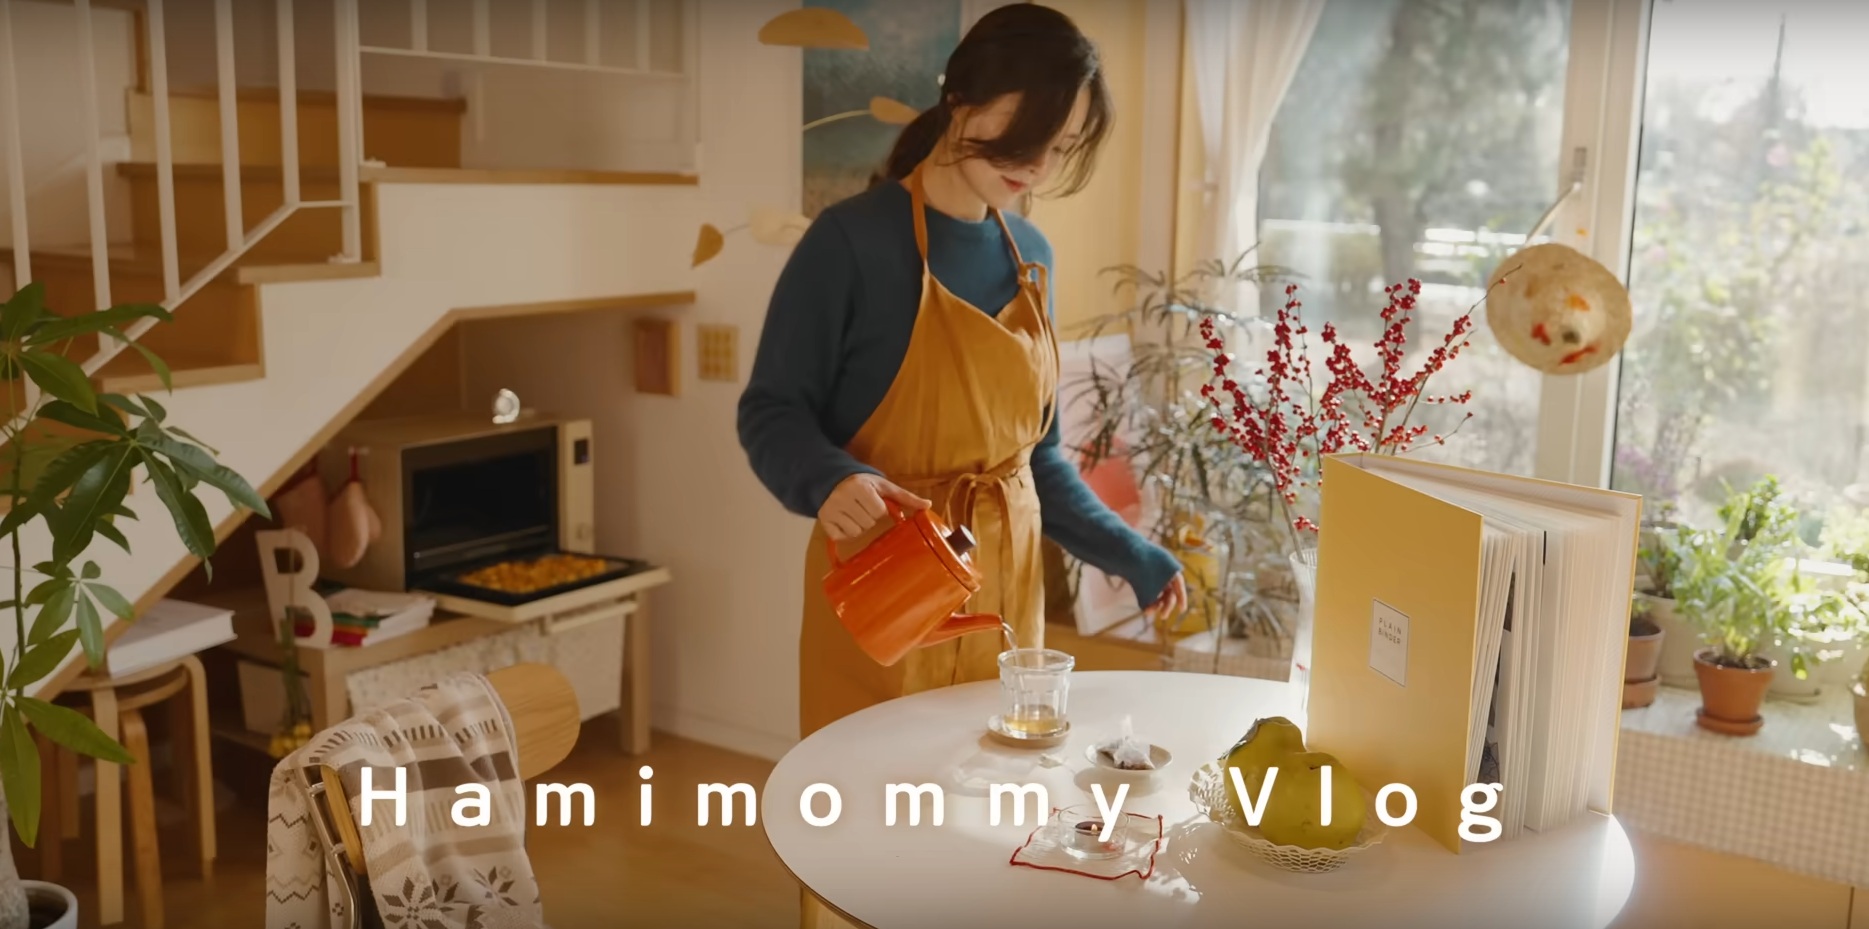 Hamimommy, YouTube Channel yang menampilkan kehidupan ibu rumah tangga di Korea Selatan